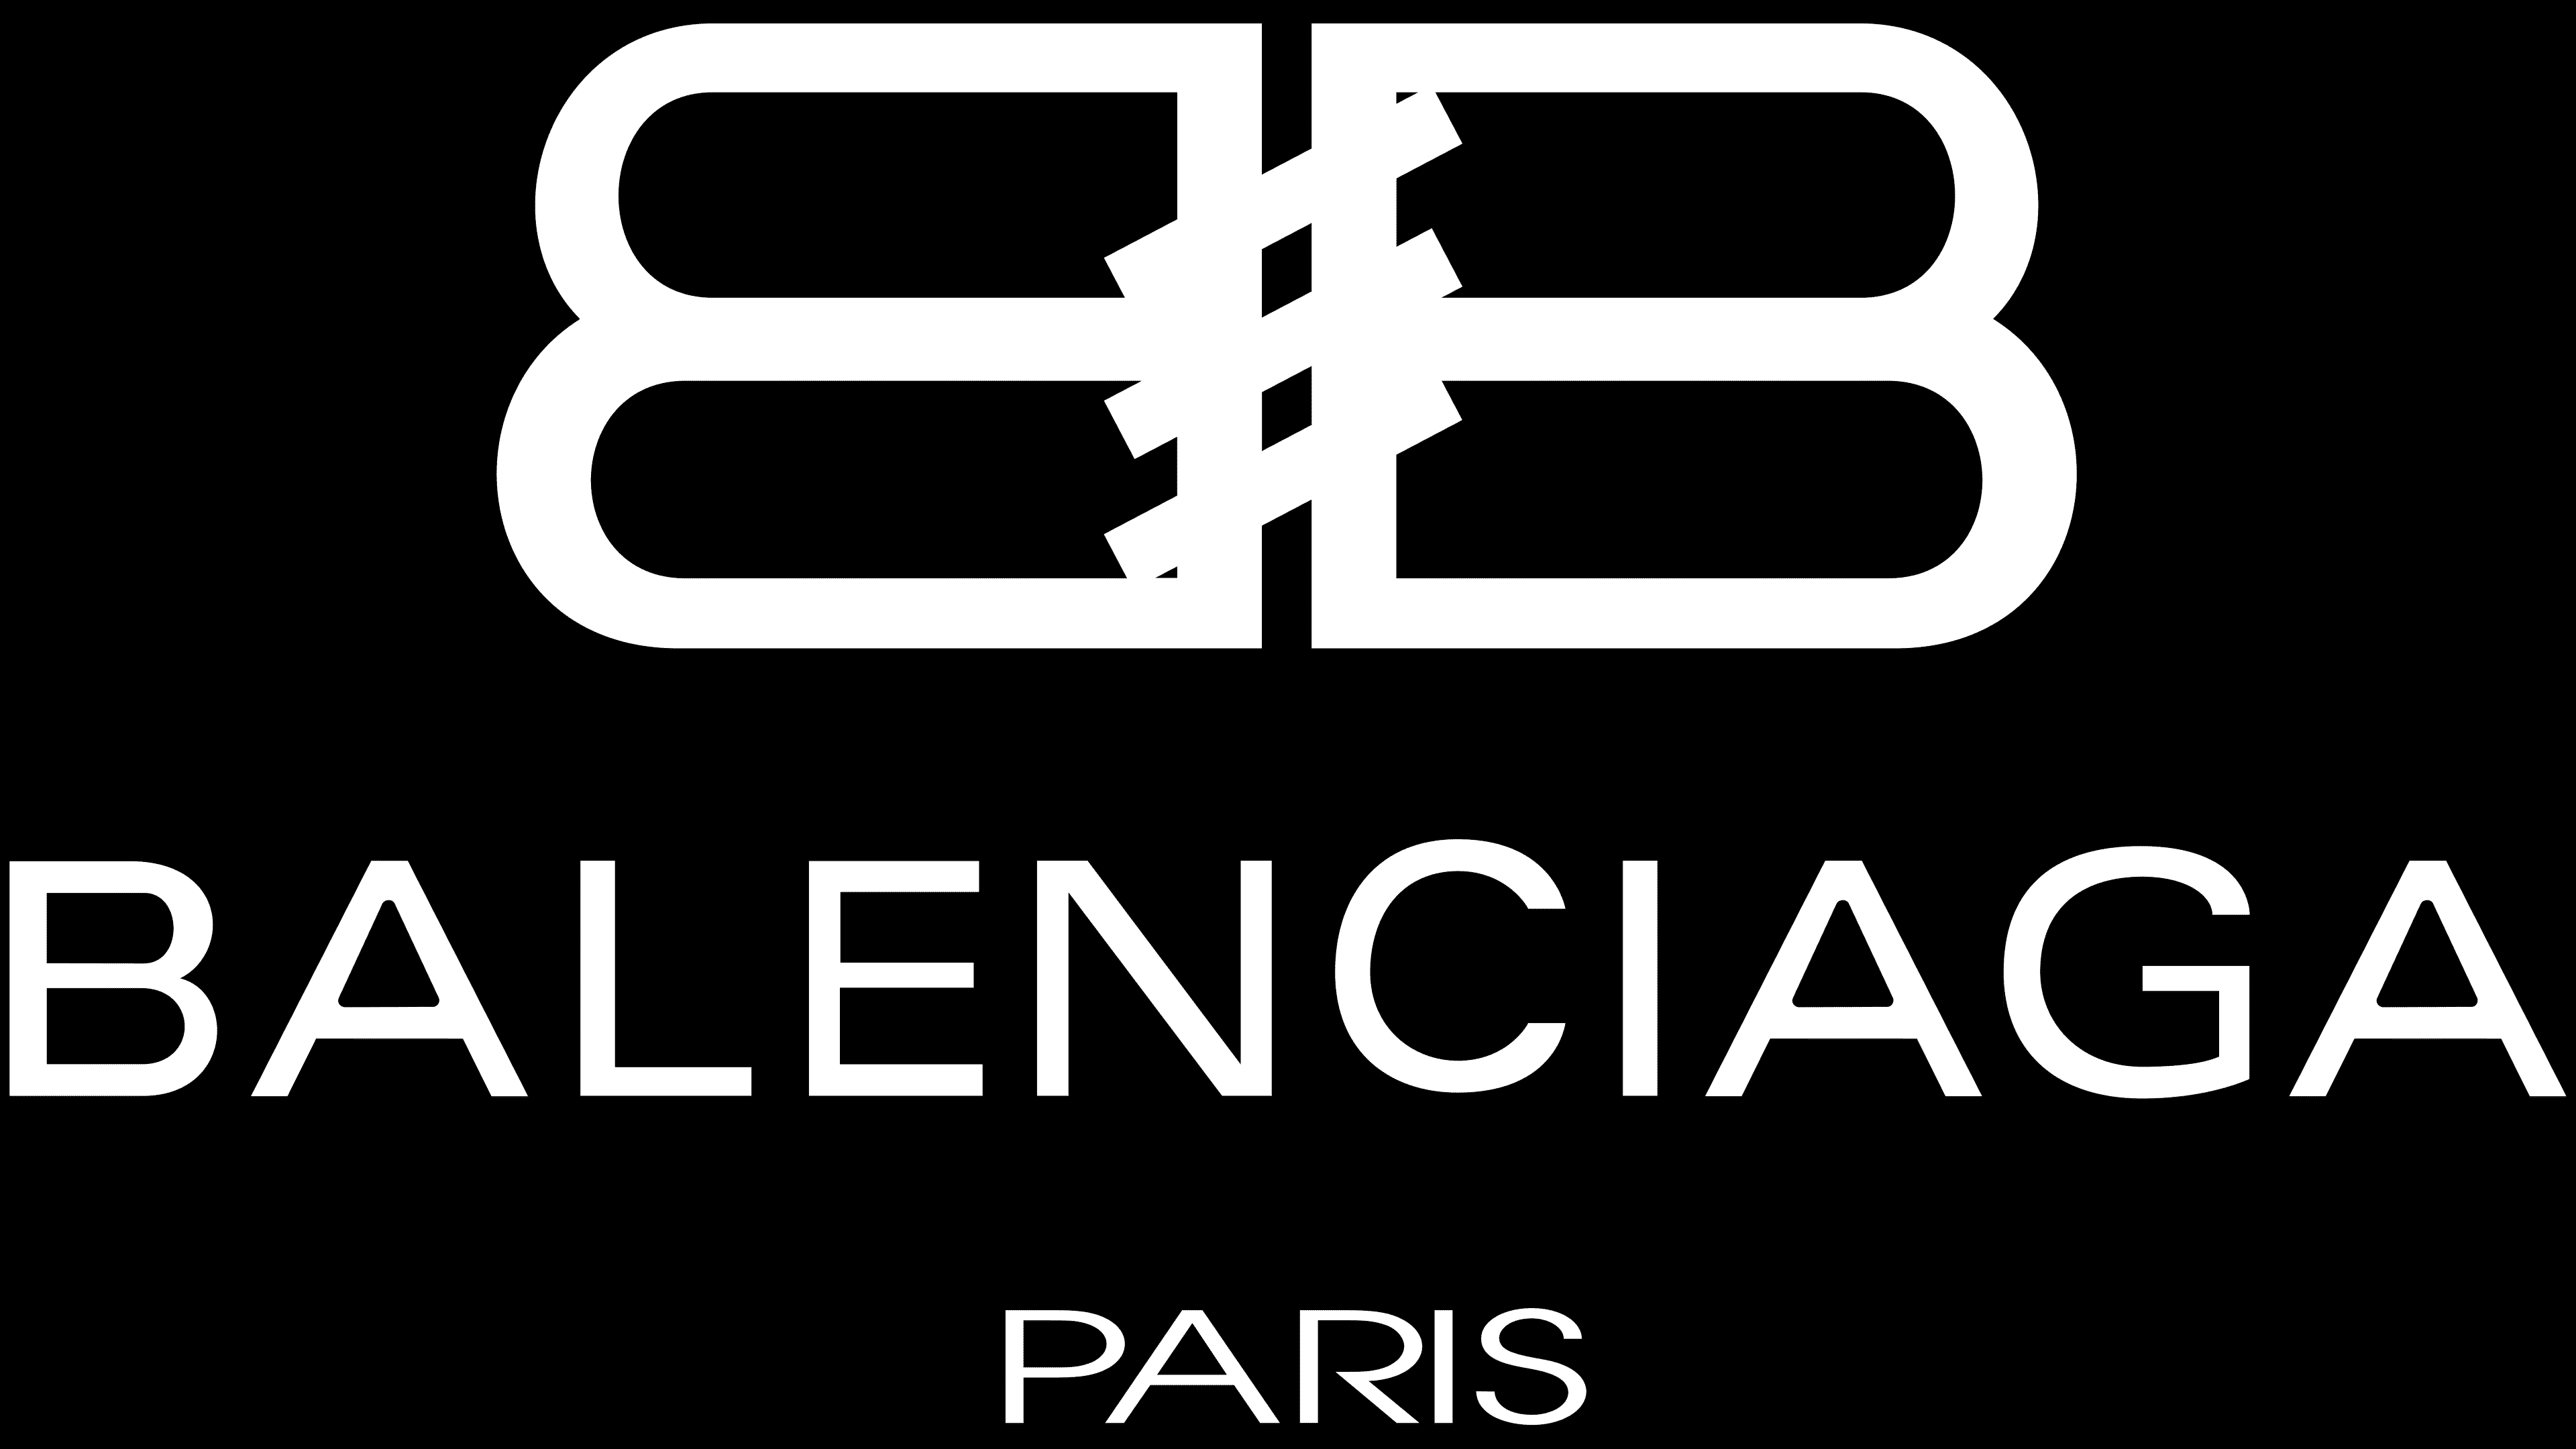 Meander innovation Anzai Balenciaga Logo, symbol, meaning, history, PNG, brand